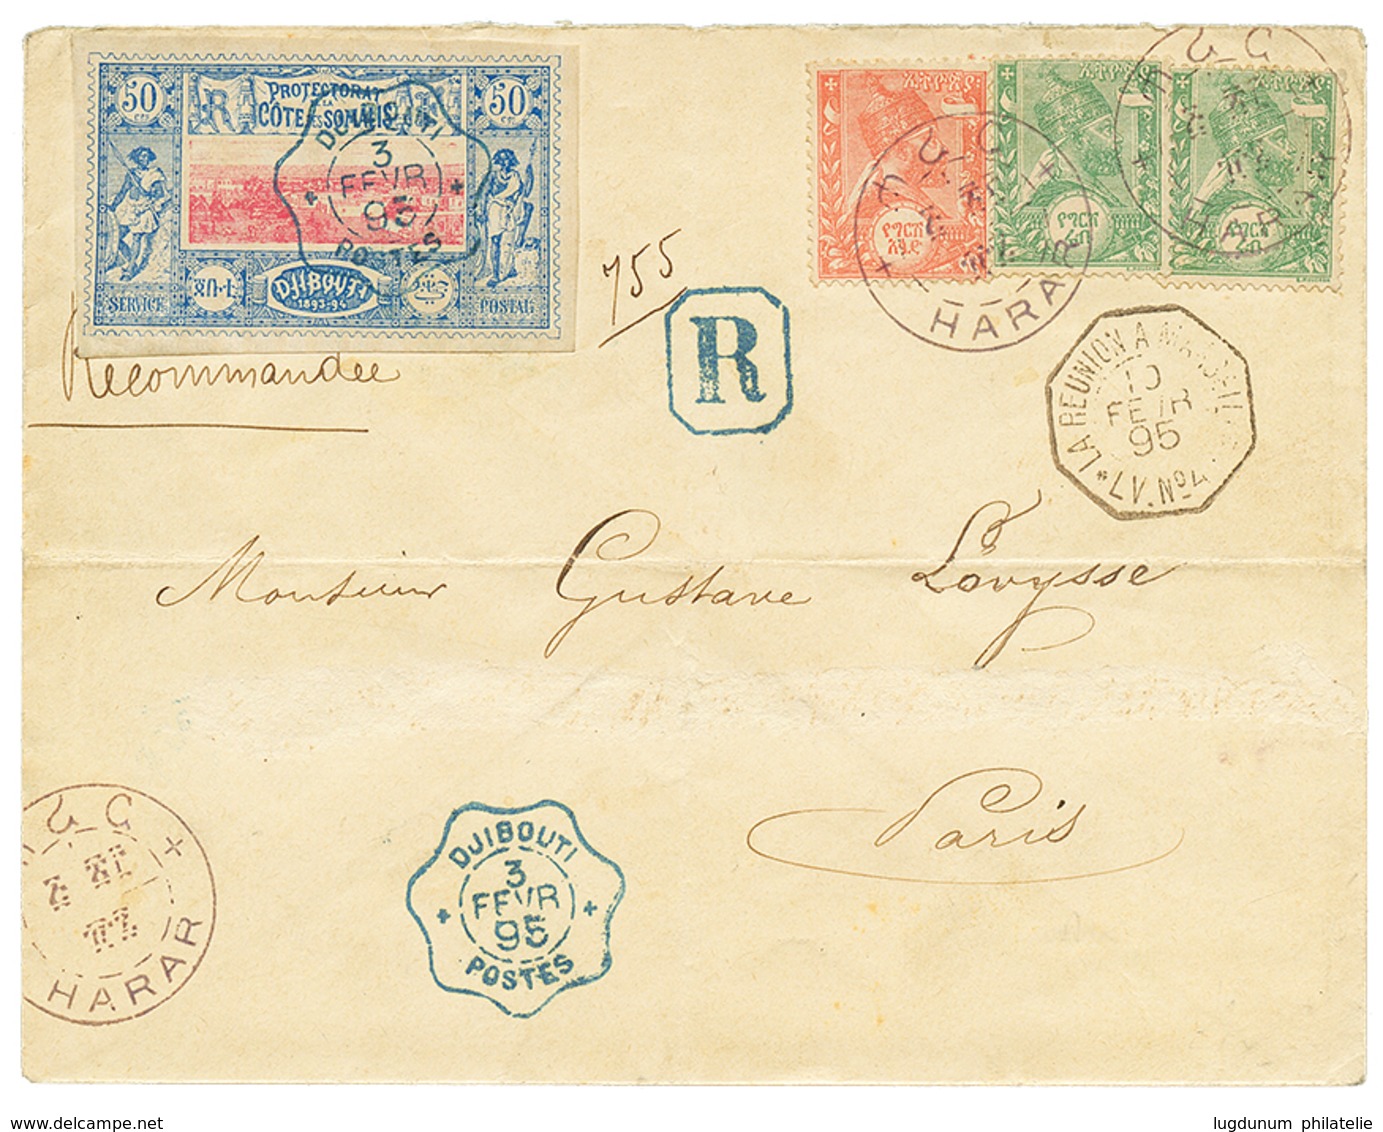 1162 1895 ETHIOPIA 1/4g(x2) + 1/2g Canc. HARAR + SOMALI COAST 50c Canc. DJIBOUTI On REGISTERED Envelope To FRANCE. Verso - Etiopia